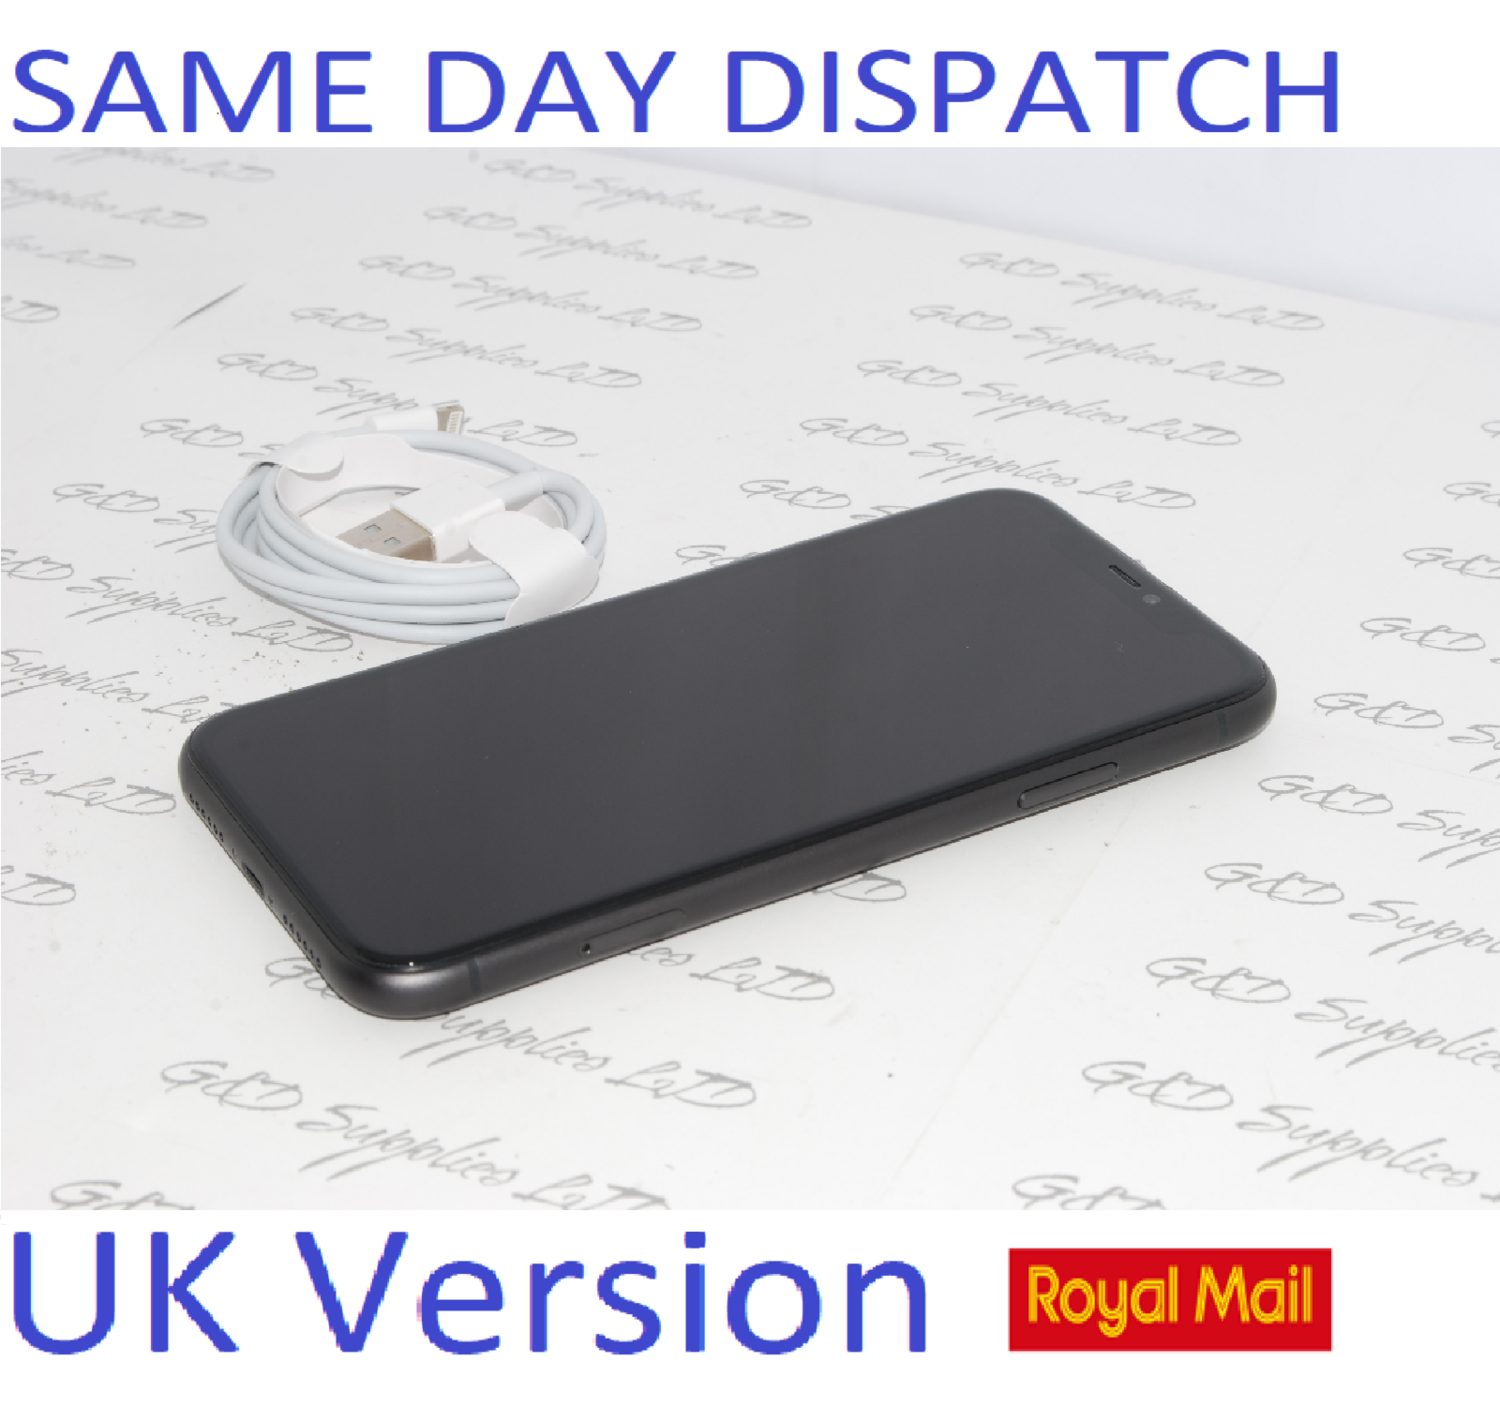 # Apple iPhone 11 64GB Mobile unlocked sim-free BLACK UK Version mint condition NO BOX